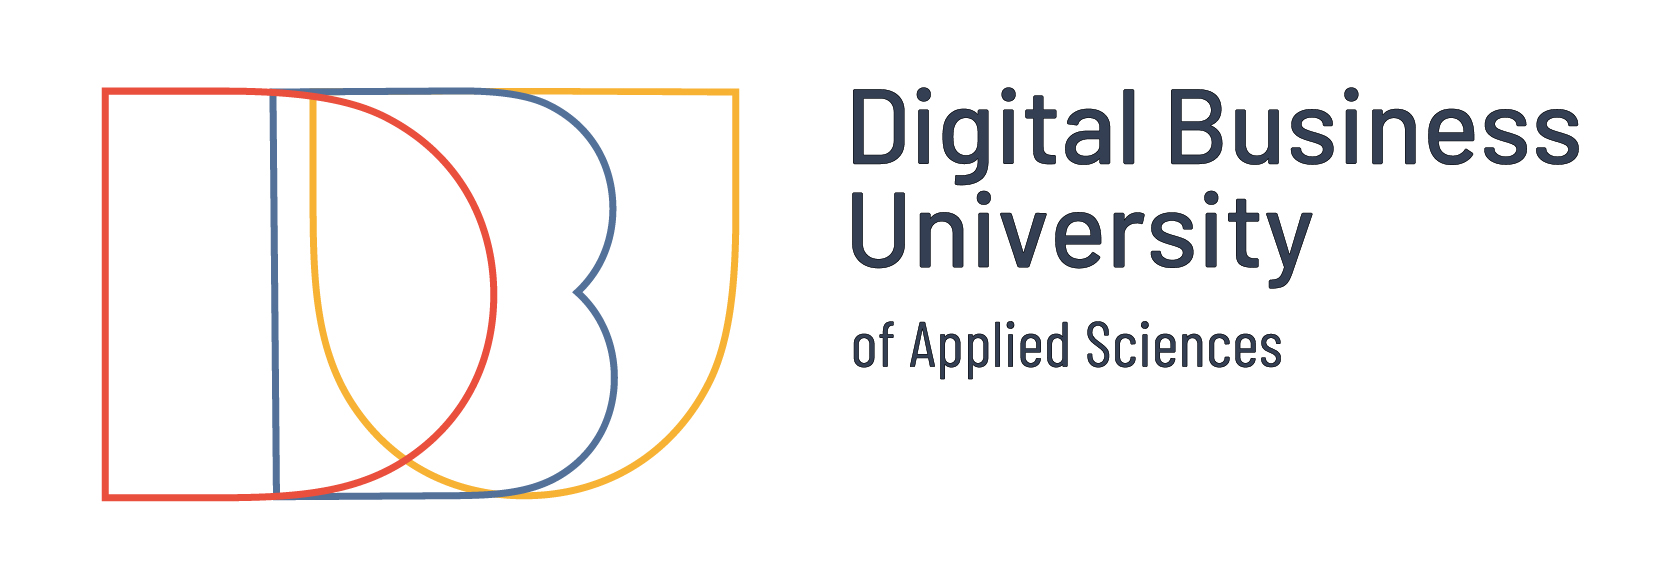 Digital Business University of Applied Sciences